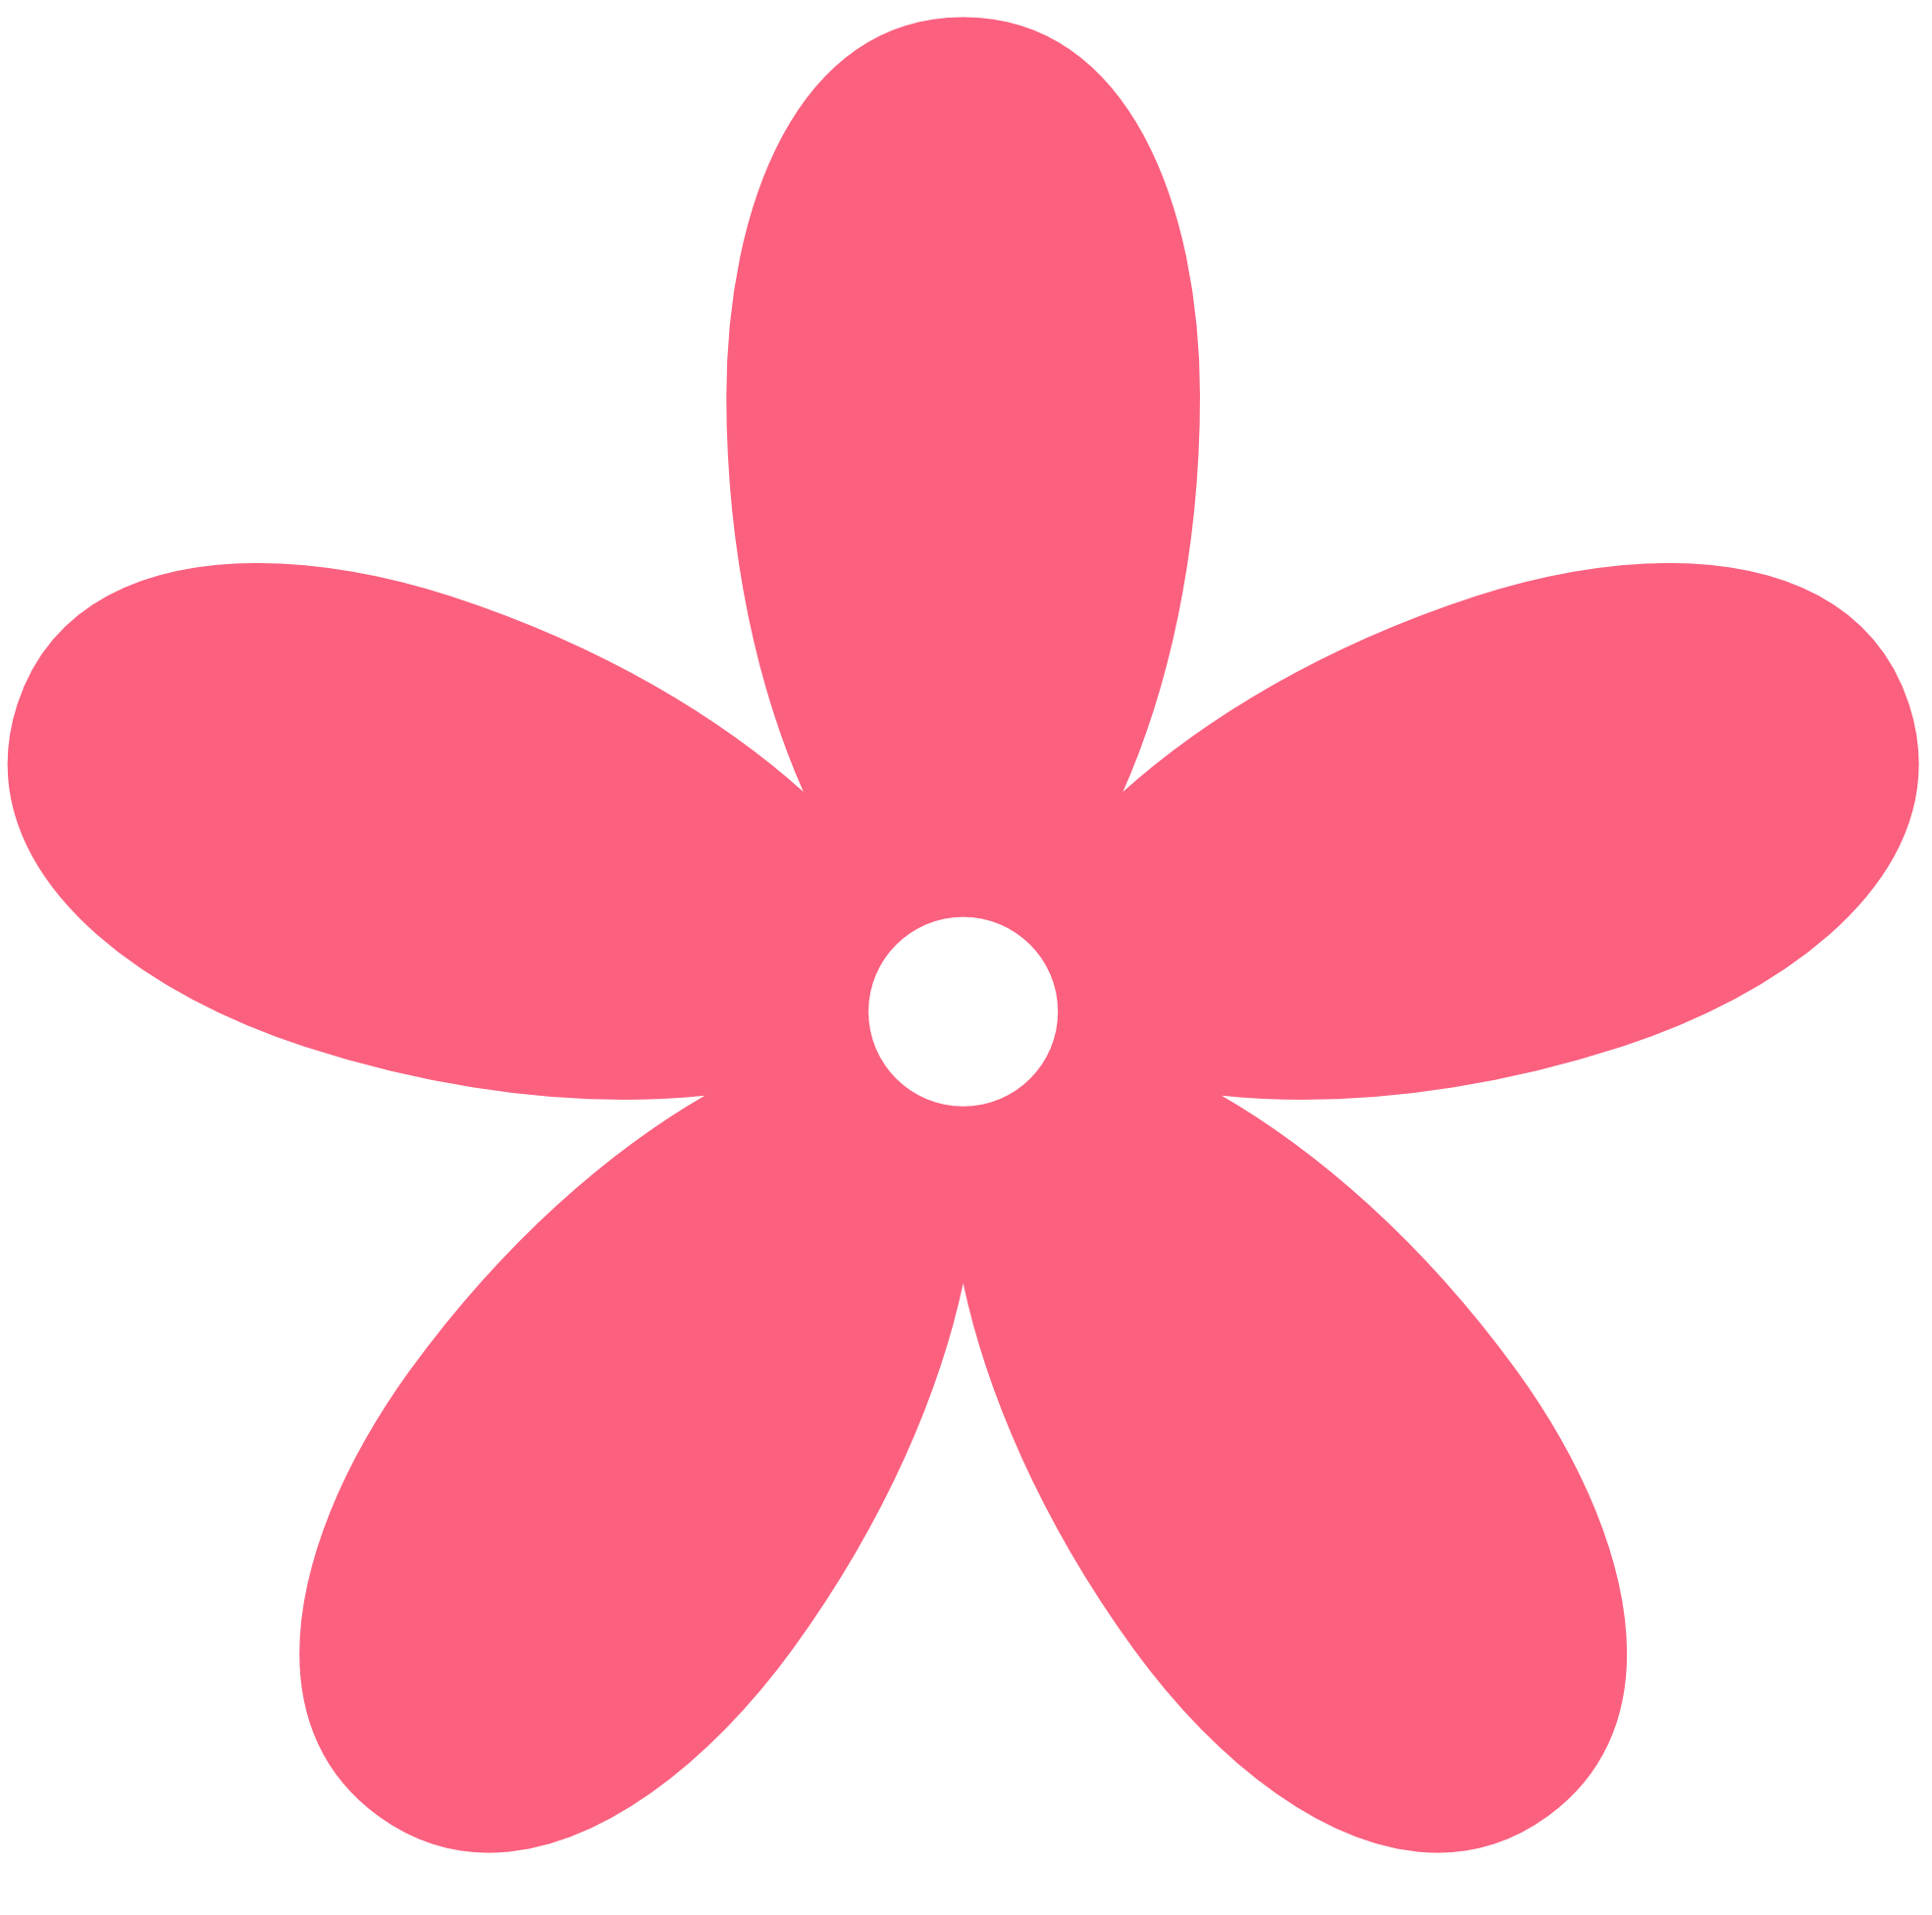 Pink Flowers Clip Art